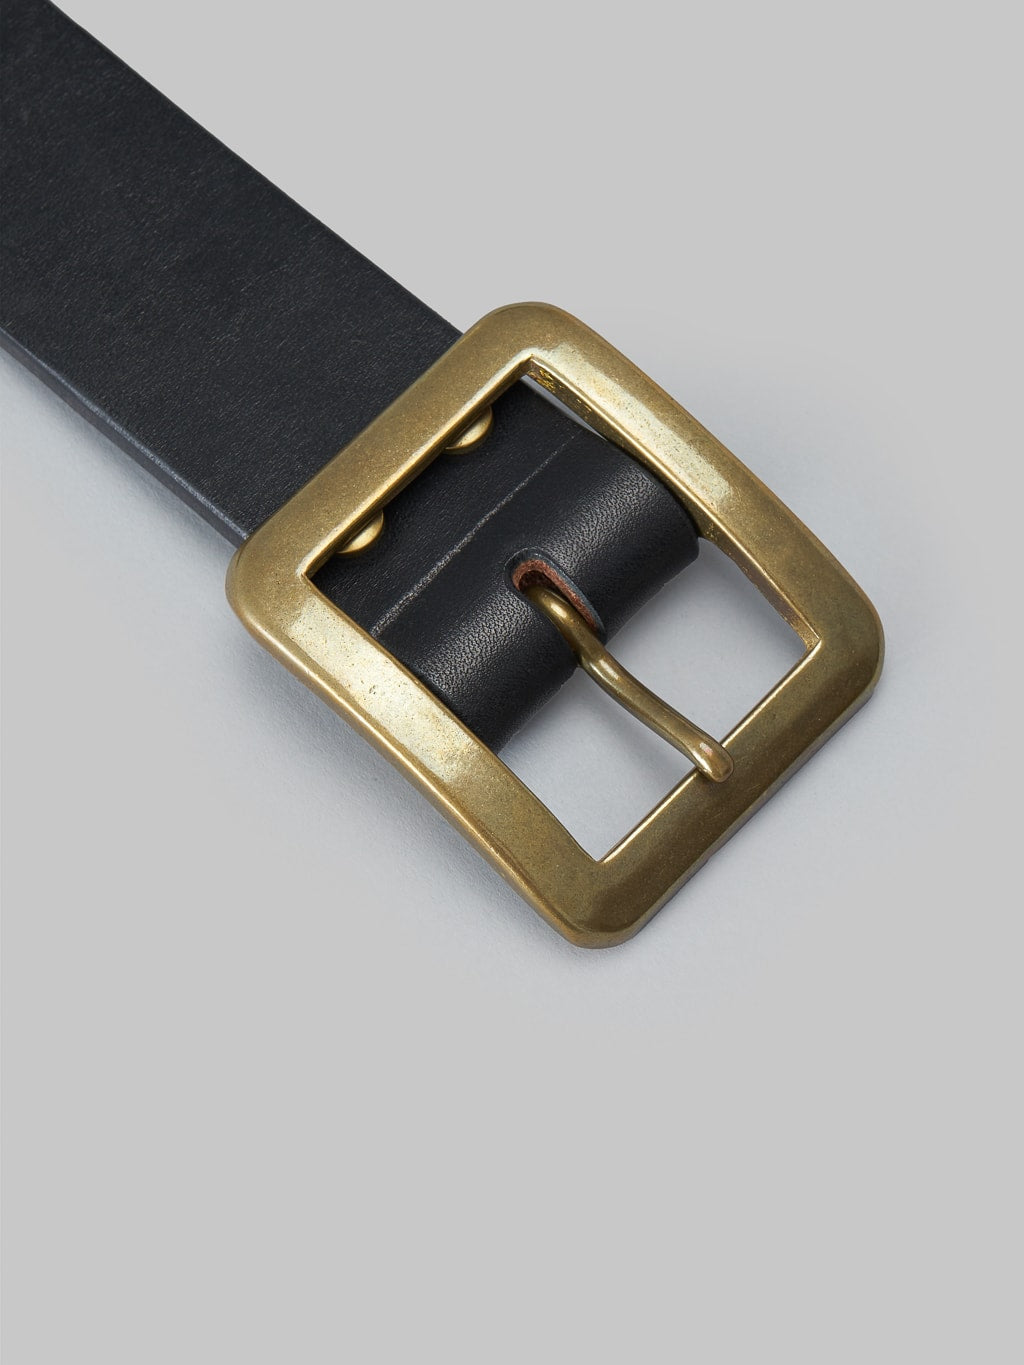 The Strike Gold Leather Belt Black